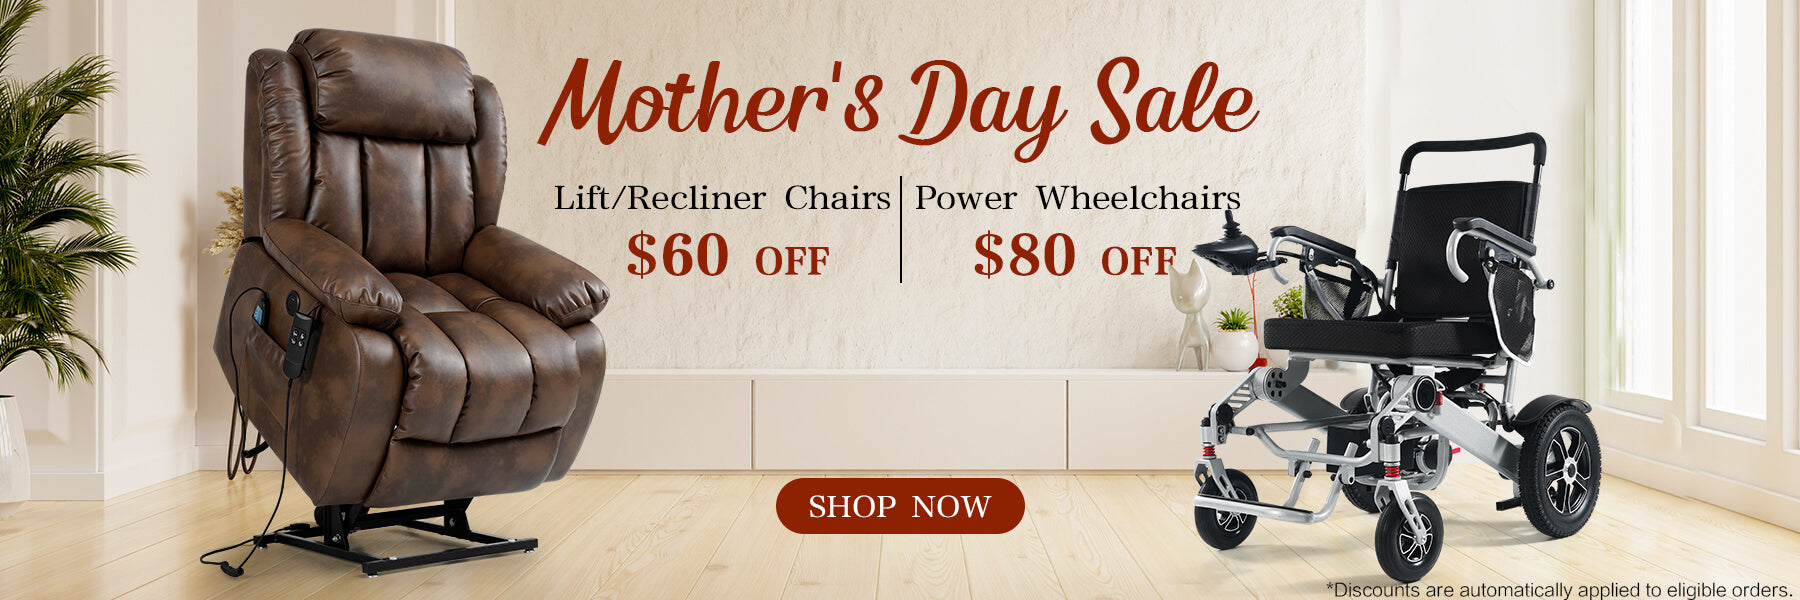 Asjmreye_recliner_wheelchair_mothers_day_sale_5